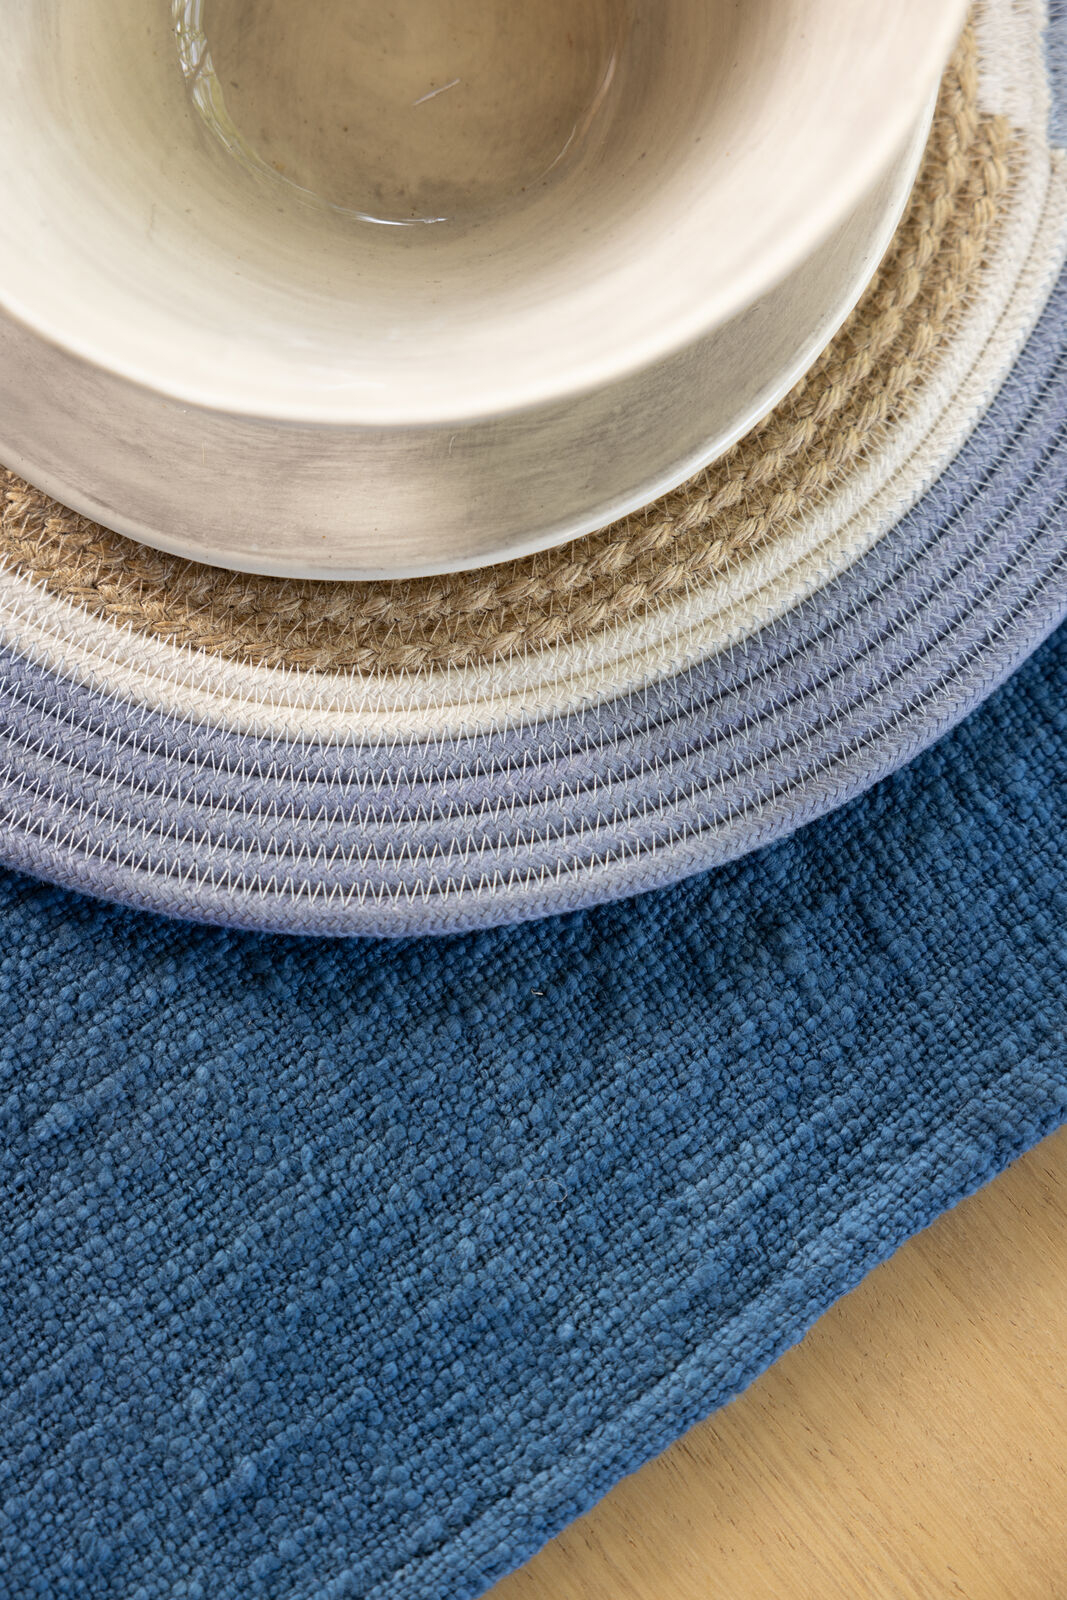 indigo tie-dye table cloth or throw